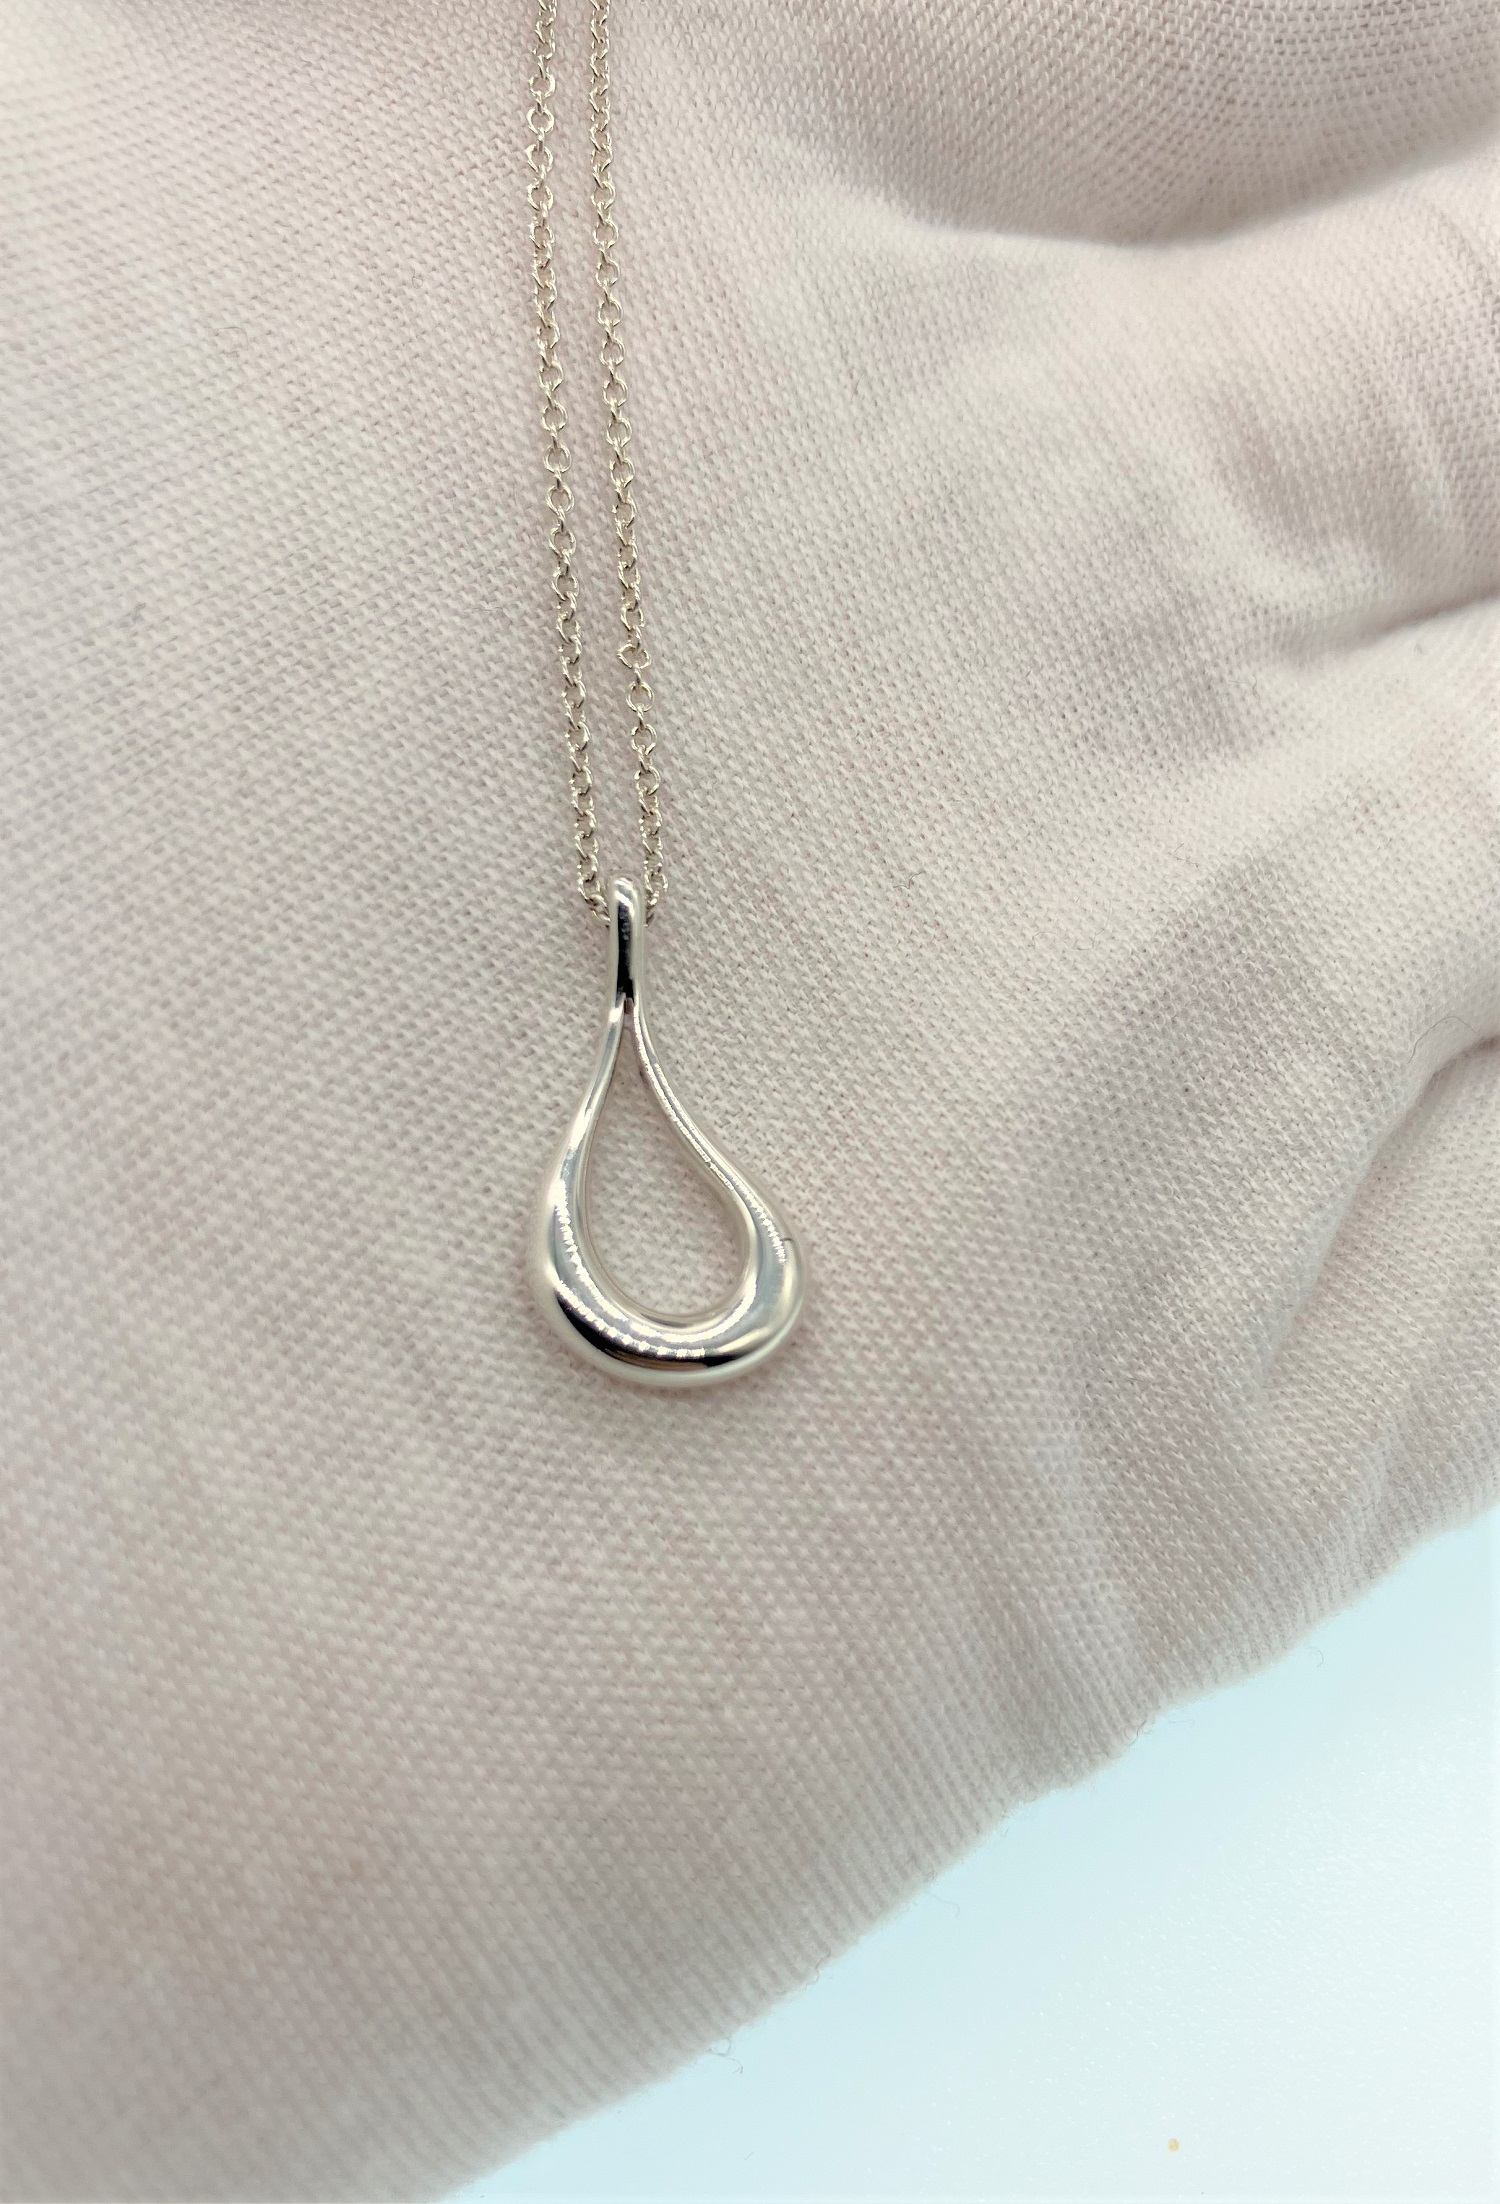 Tiffany & Co Elsa Peretti Open Teardrop Necklace, larger size - Second ...